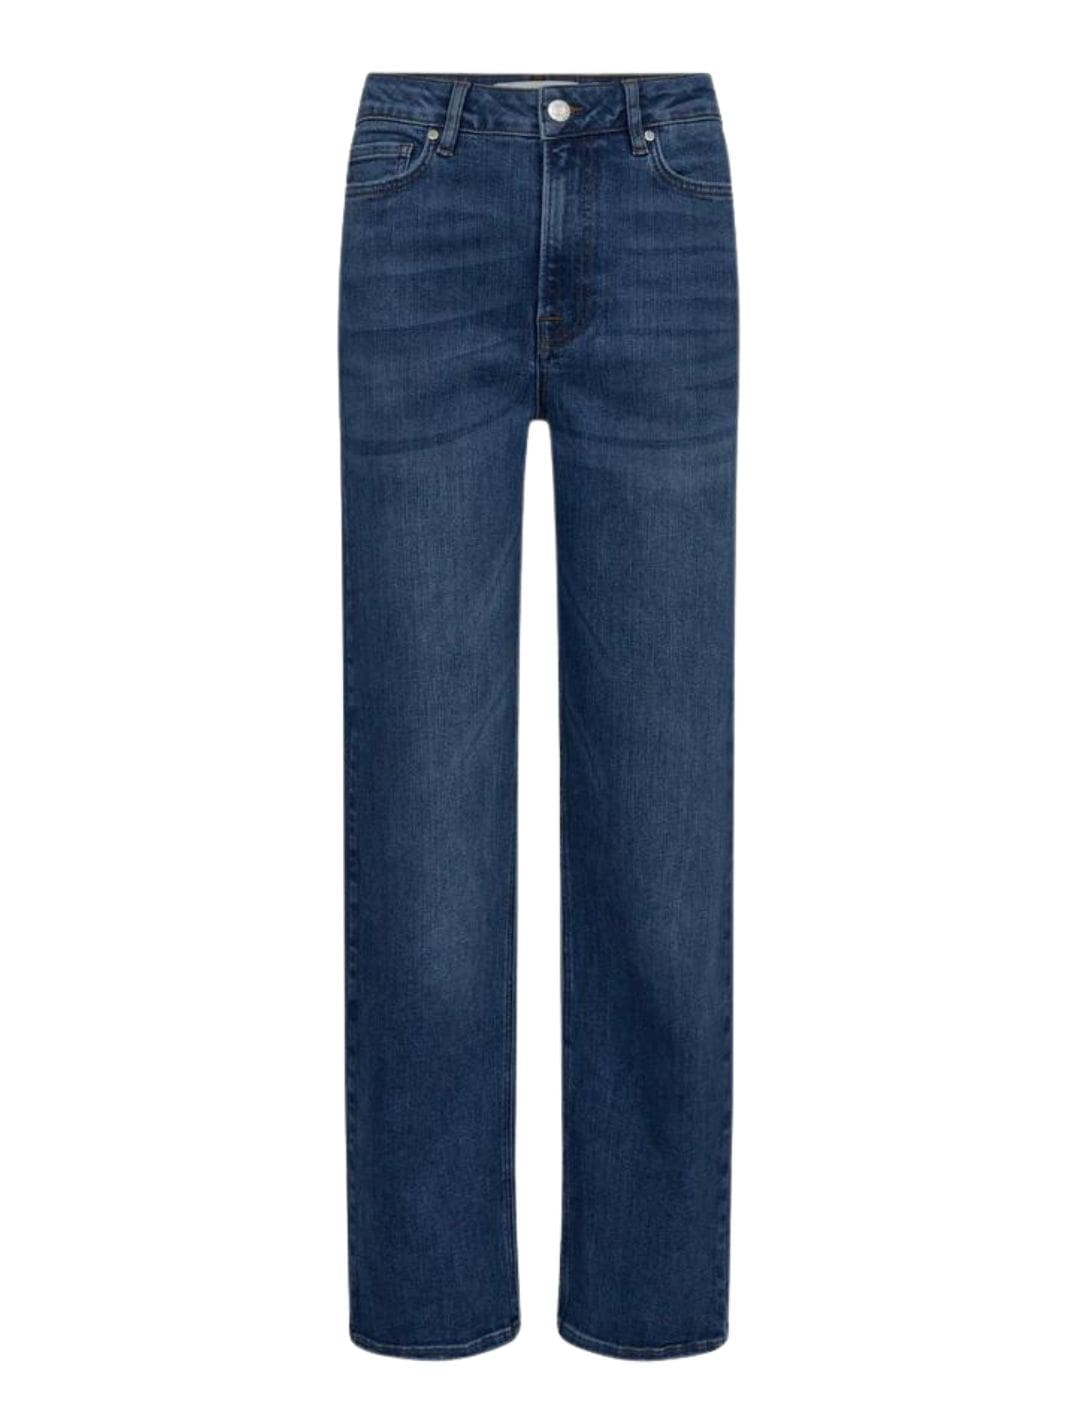 Tomorrow Jeans Jeans | TRW-Brown Jeans Wash Prato Denim Blue